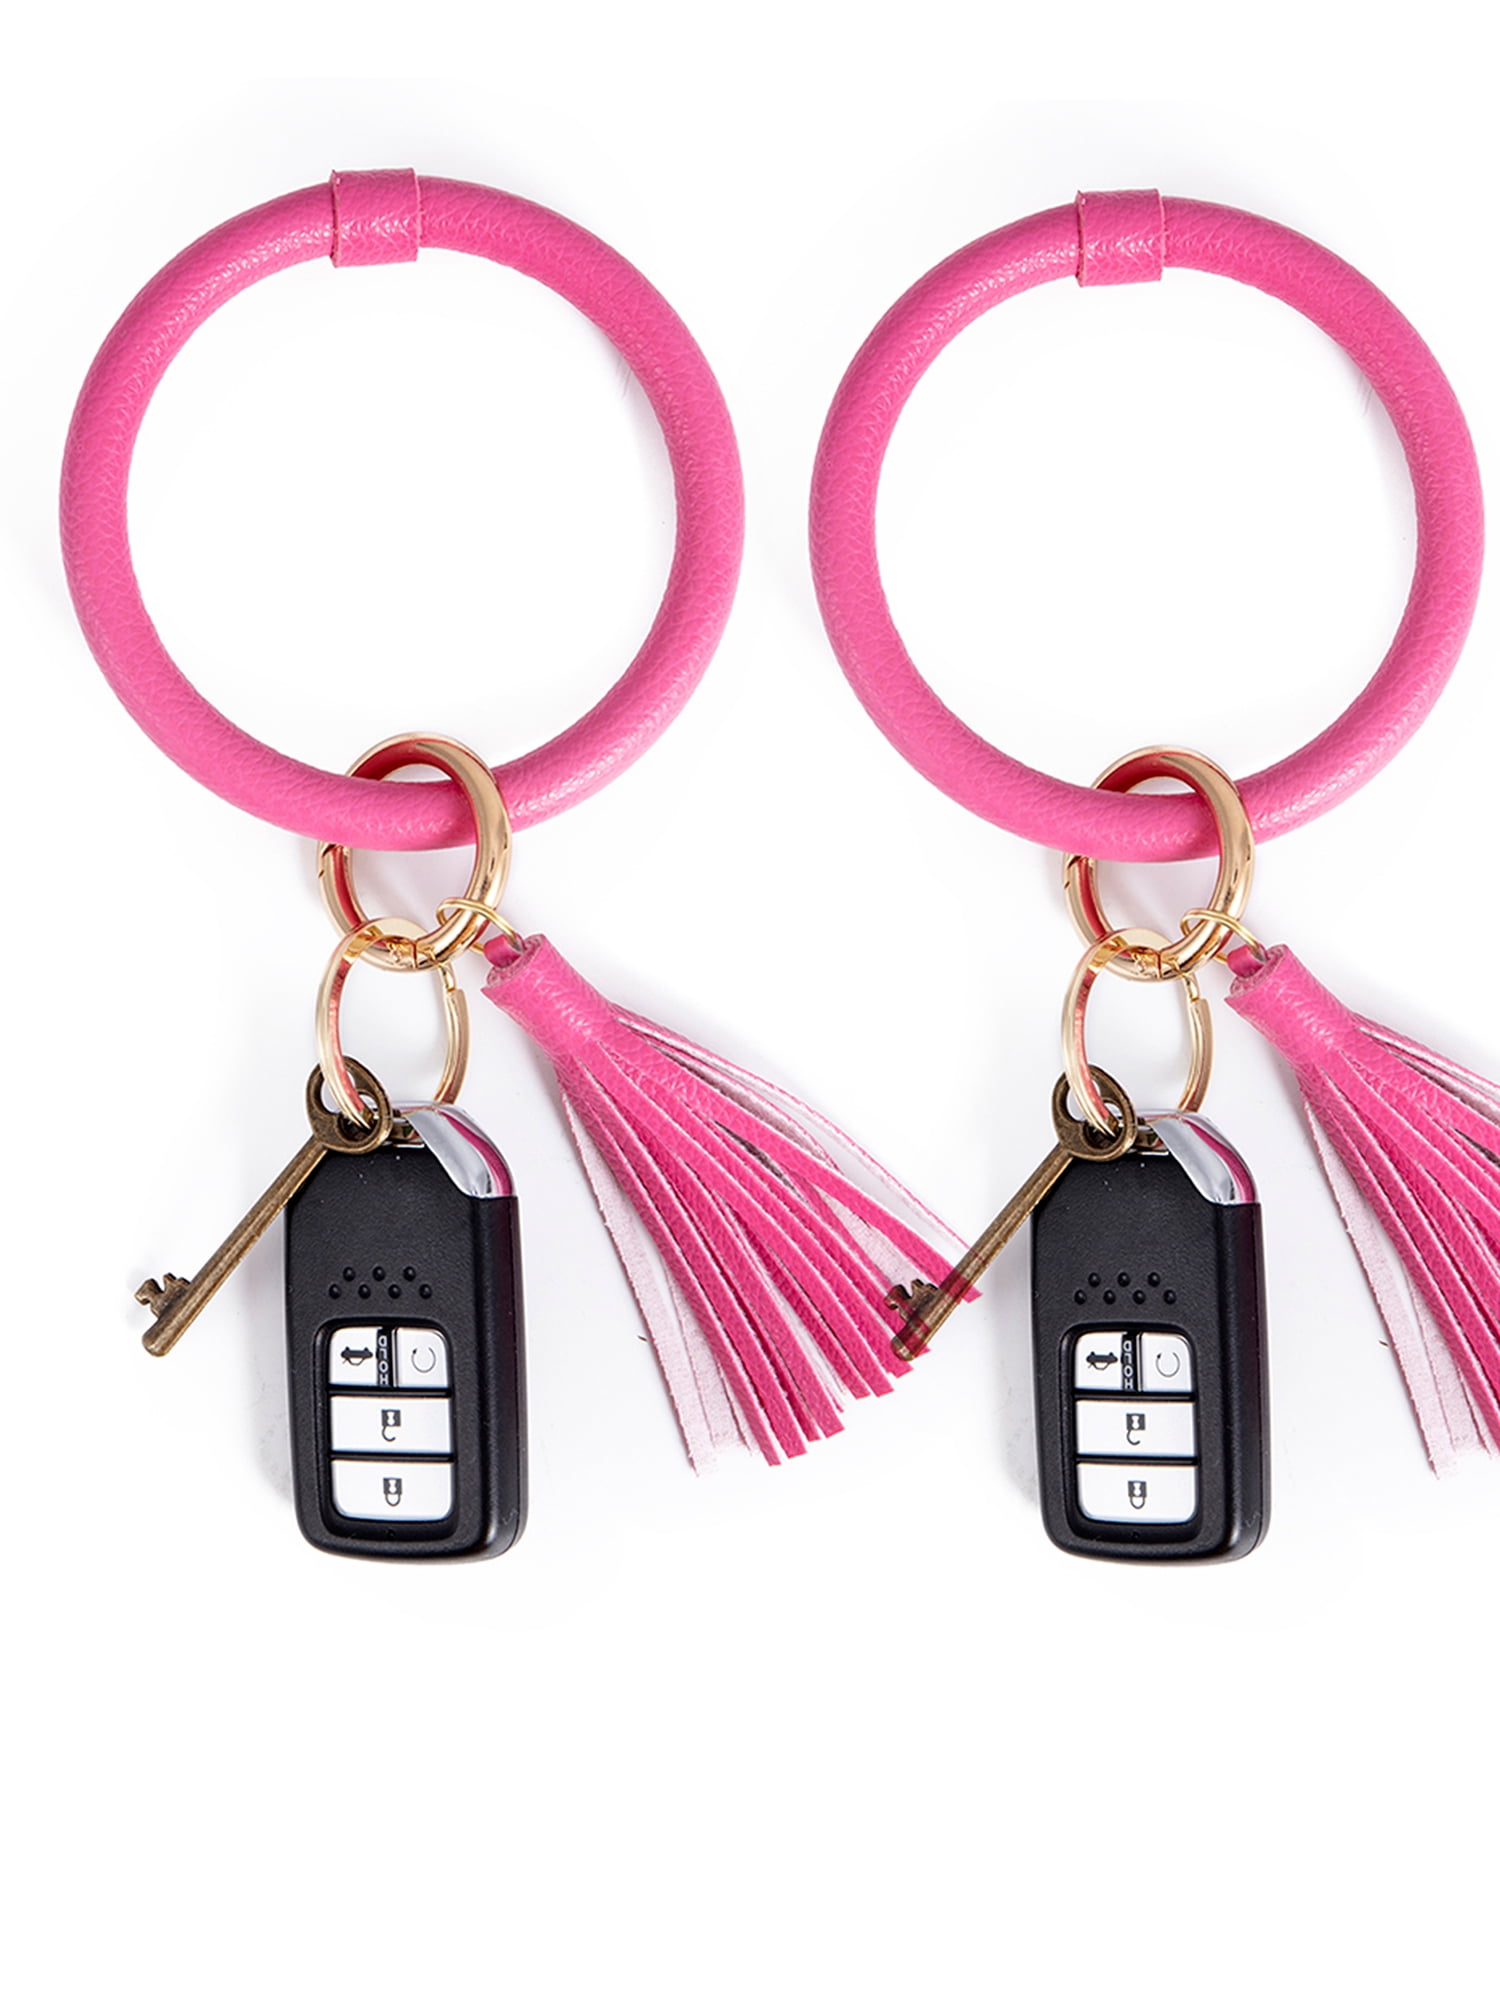 L&N Rainbery PU Leather O Key Chain Circle Tassel Wristlet Keychain for Women Girls 